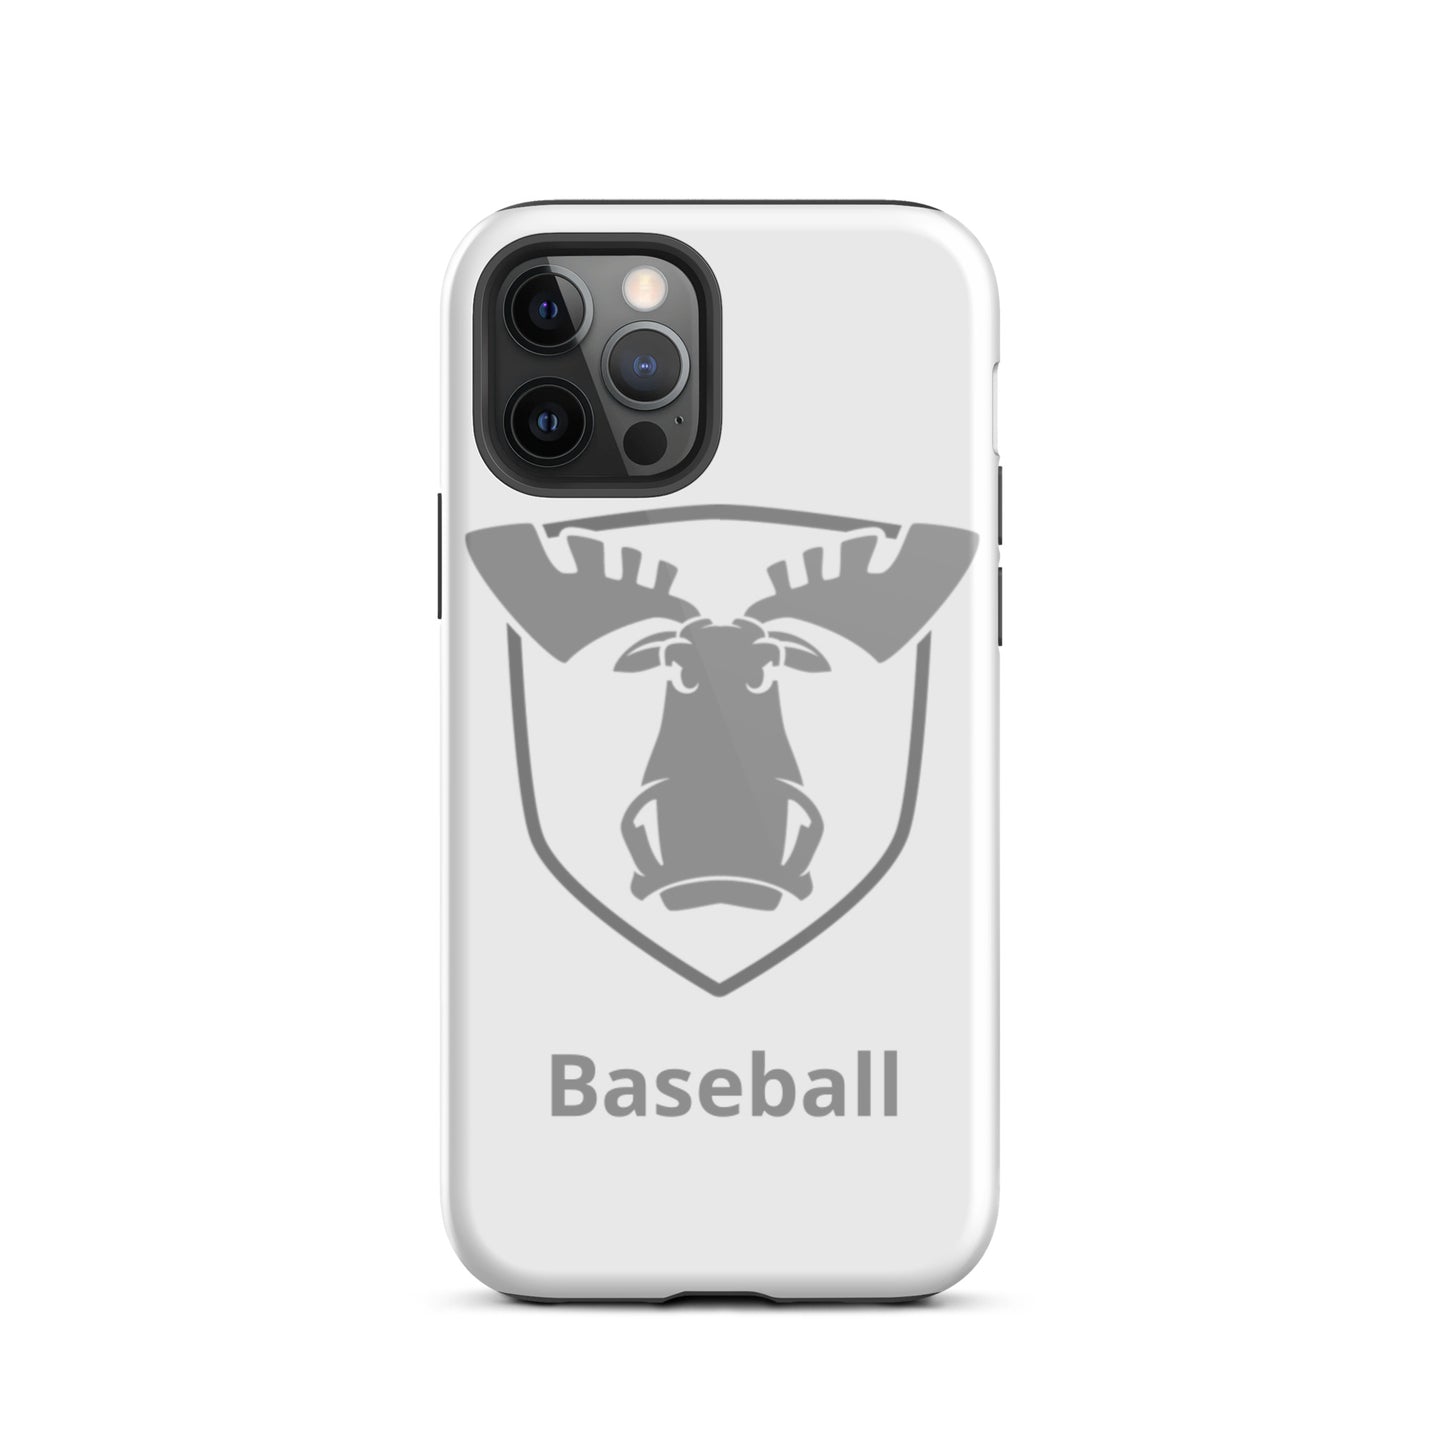 Tough iPhone case with Moose Shield Logo